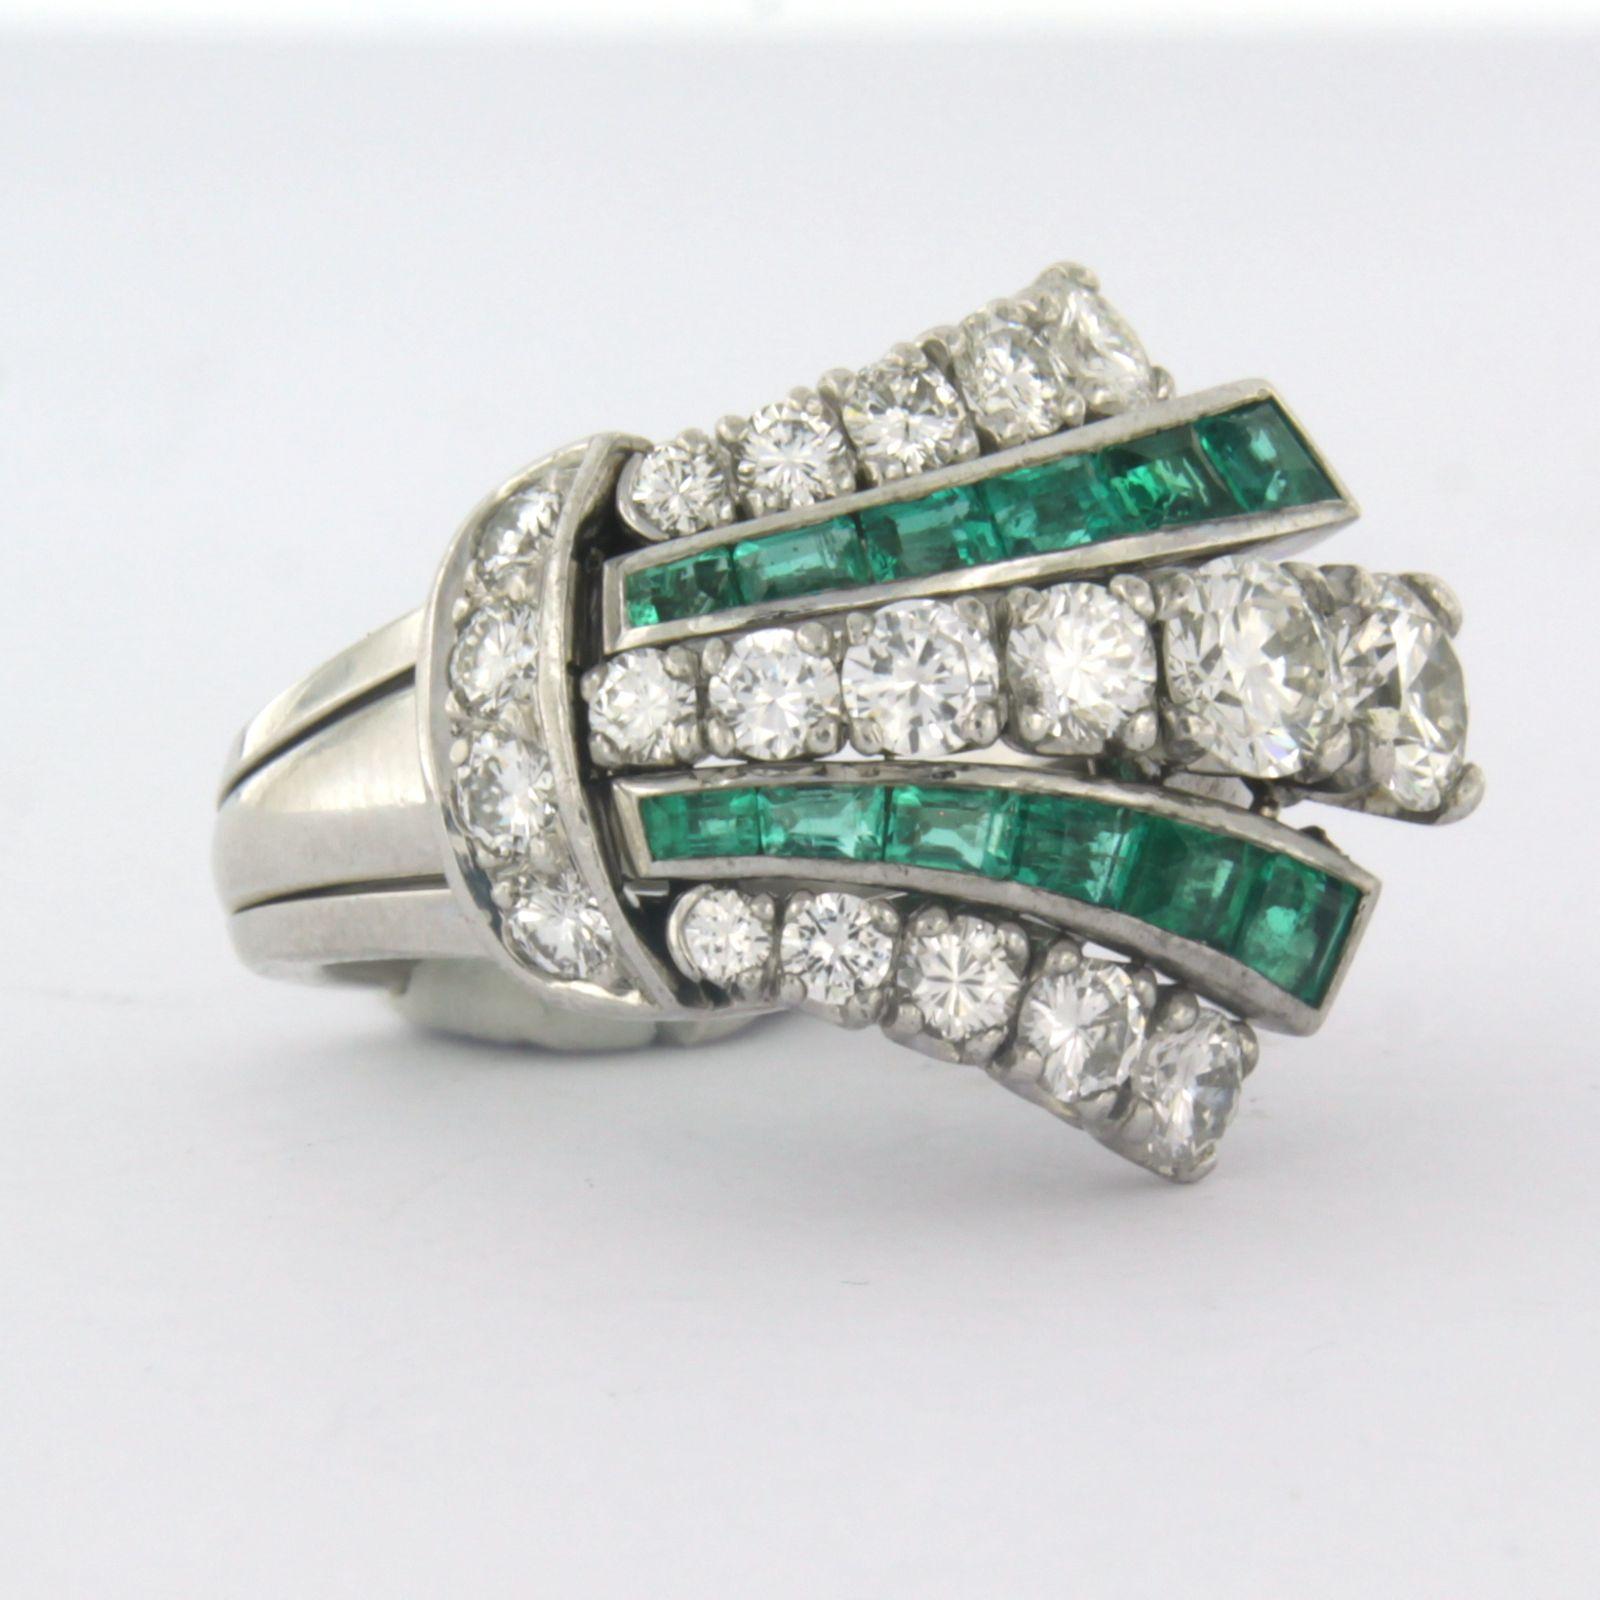 Brilliant Cut IGI diamond report - RIng with emerald and diamonds 18k white gold For Sale